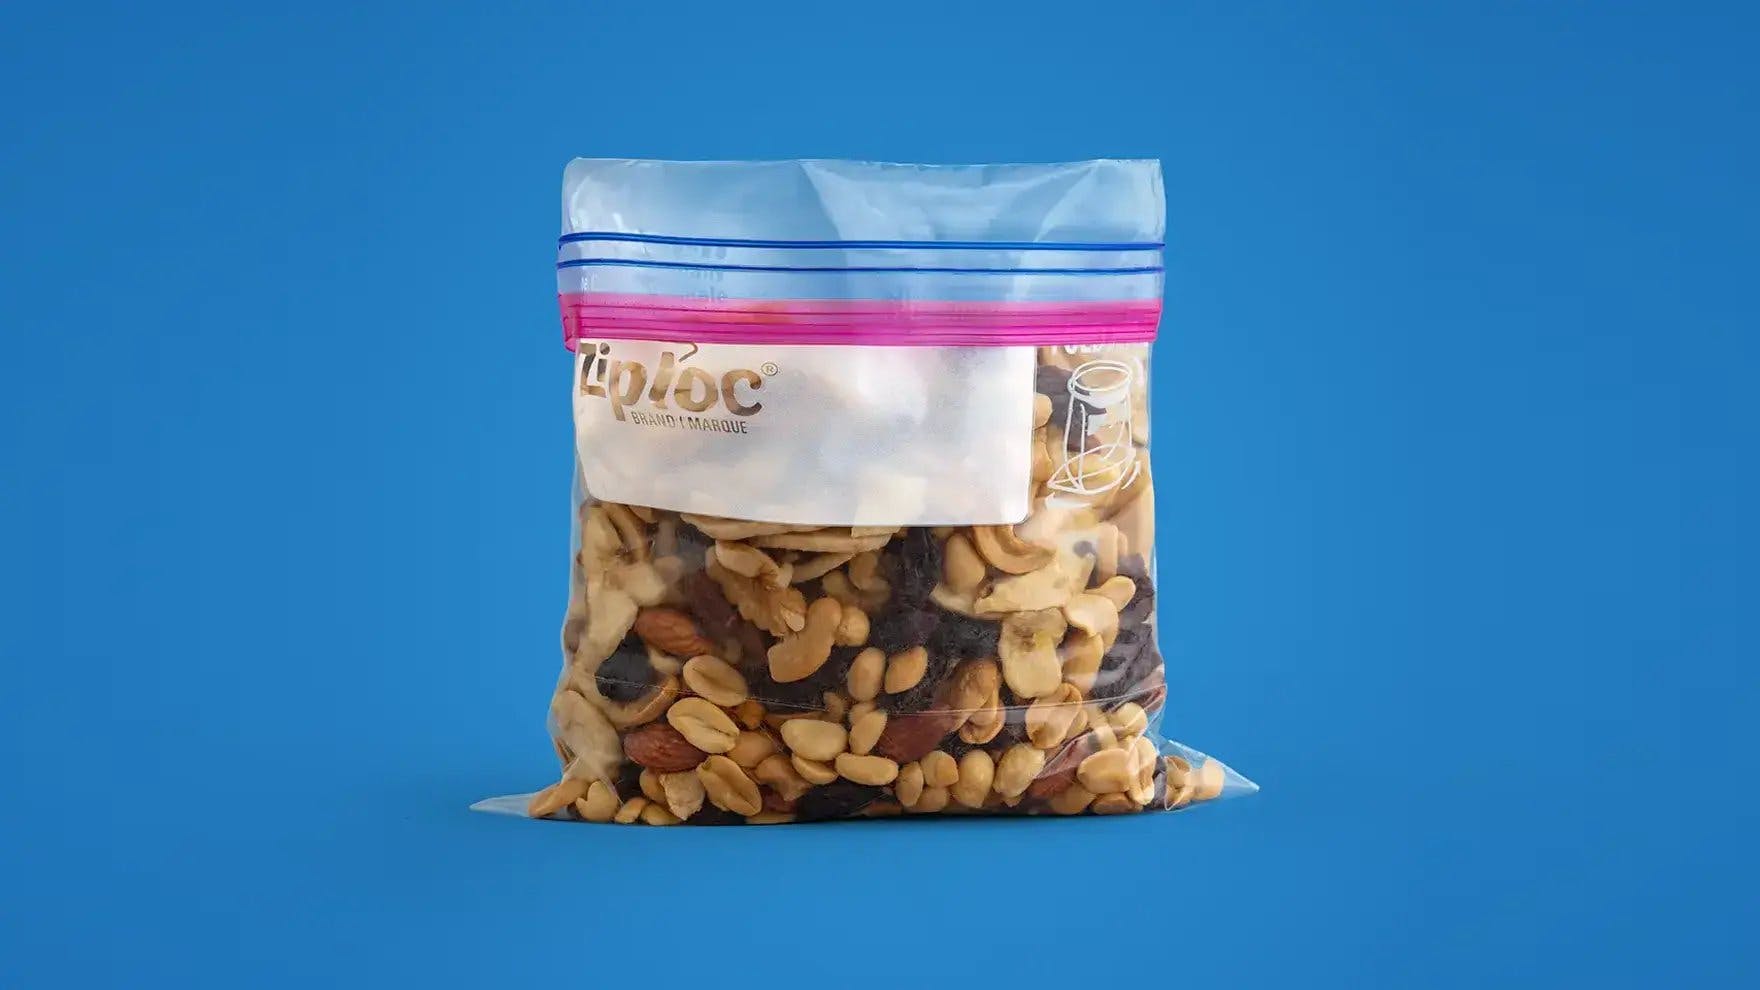 Ziploc medium quart-sized storage bag filled with mixed nuts.